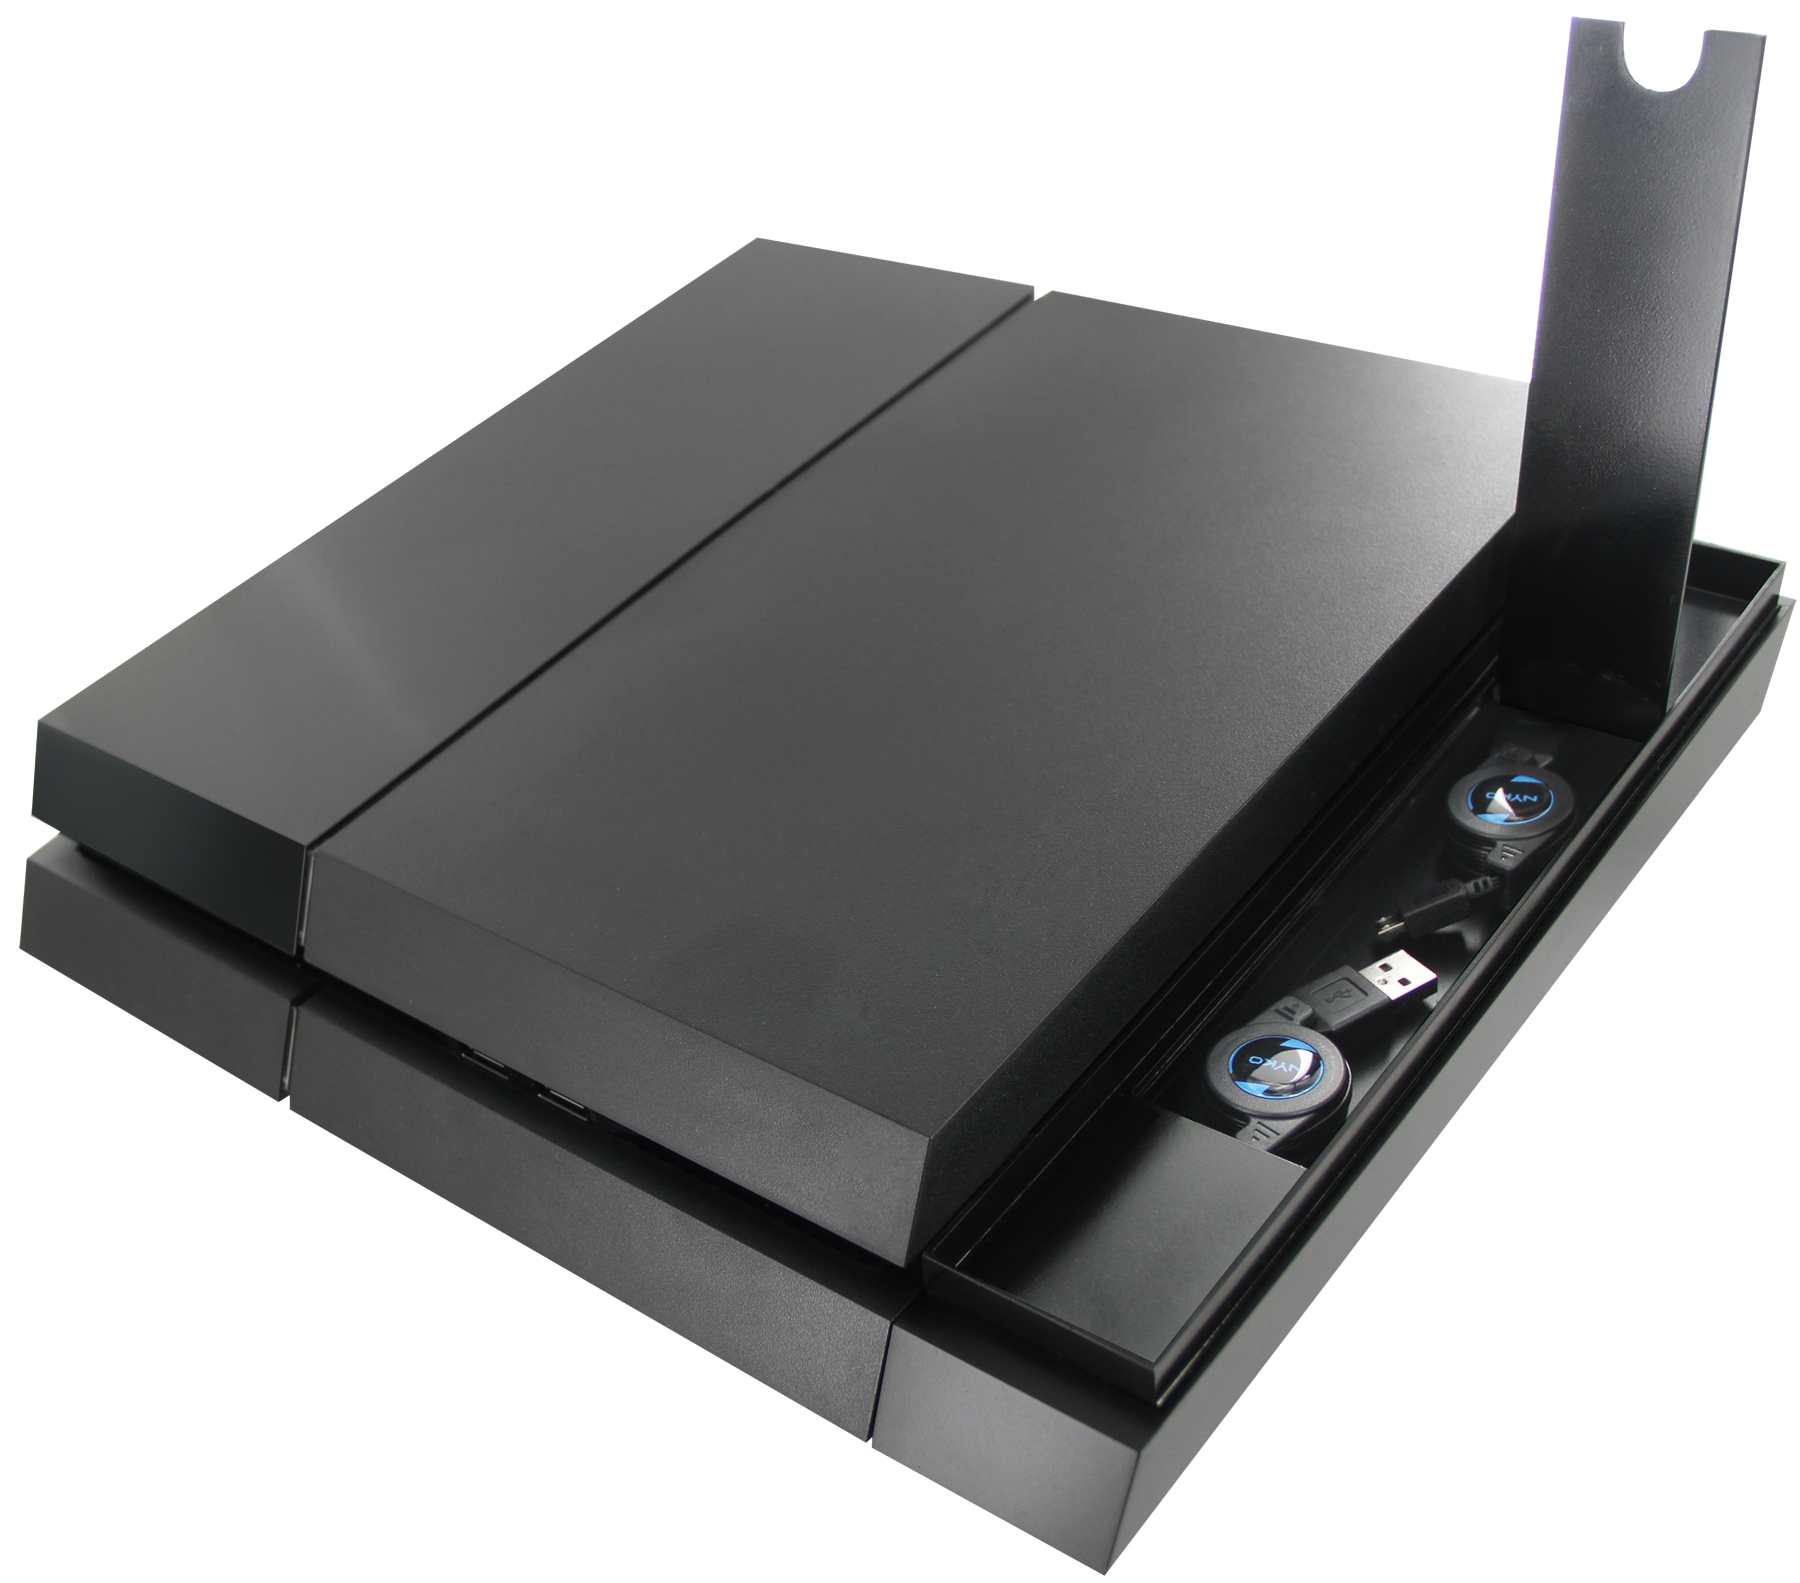 Аксессуары для сони плейстейшен 4. Xbox 360 зарядная станция Nyko. Sony PLAYSTATION 4 Pro аксессуары. Аксессуары для ps4 Slim.